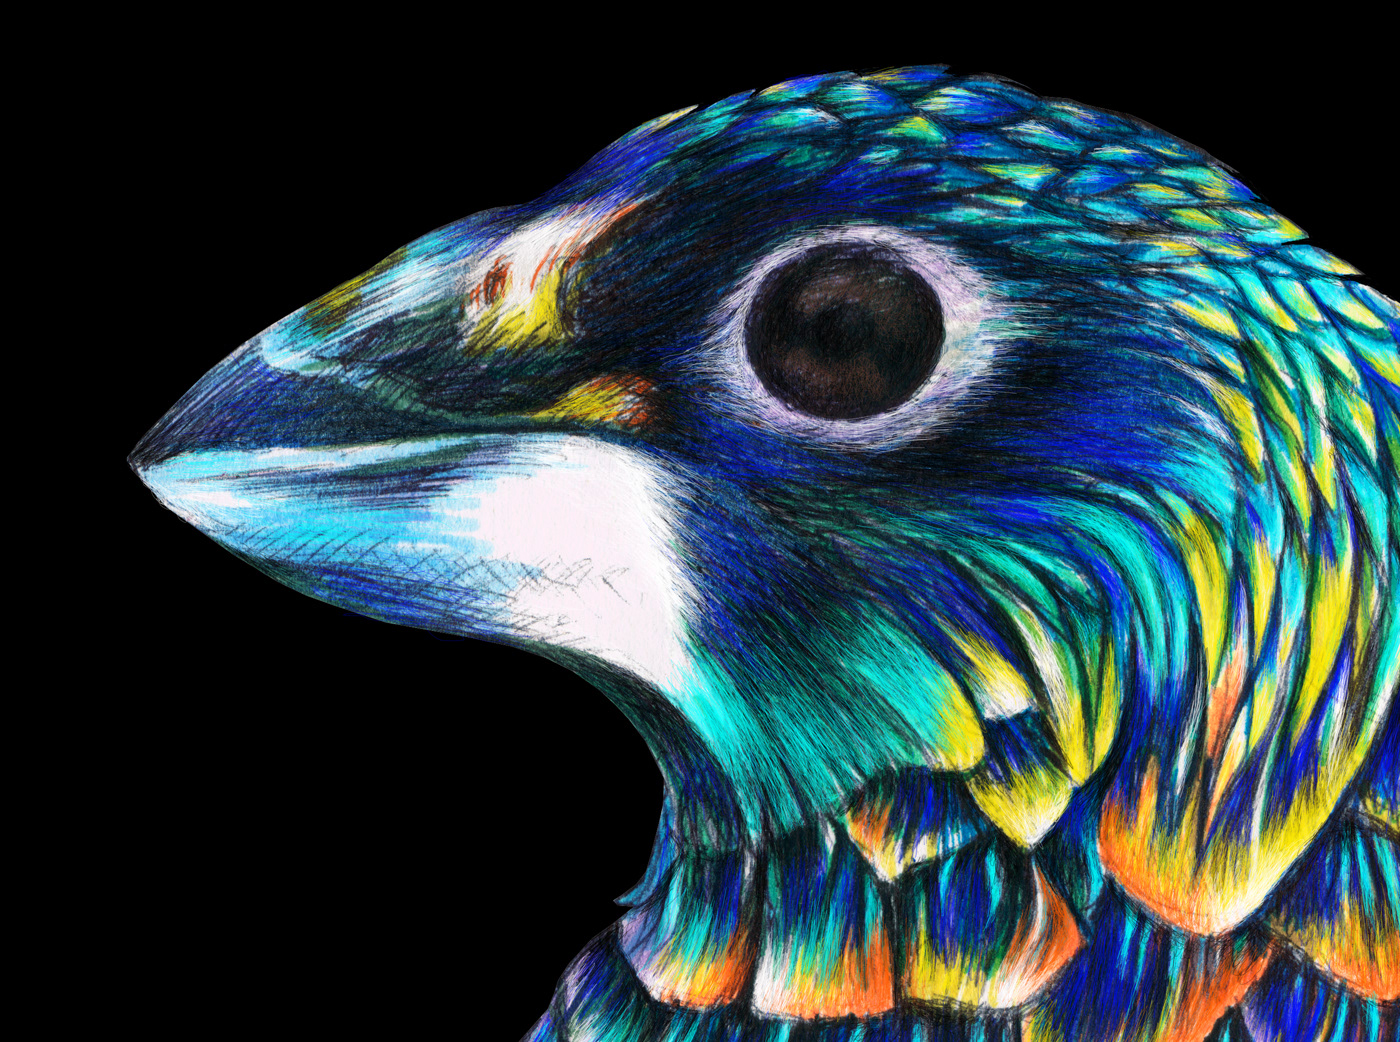 Details of illustration representing bird